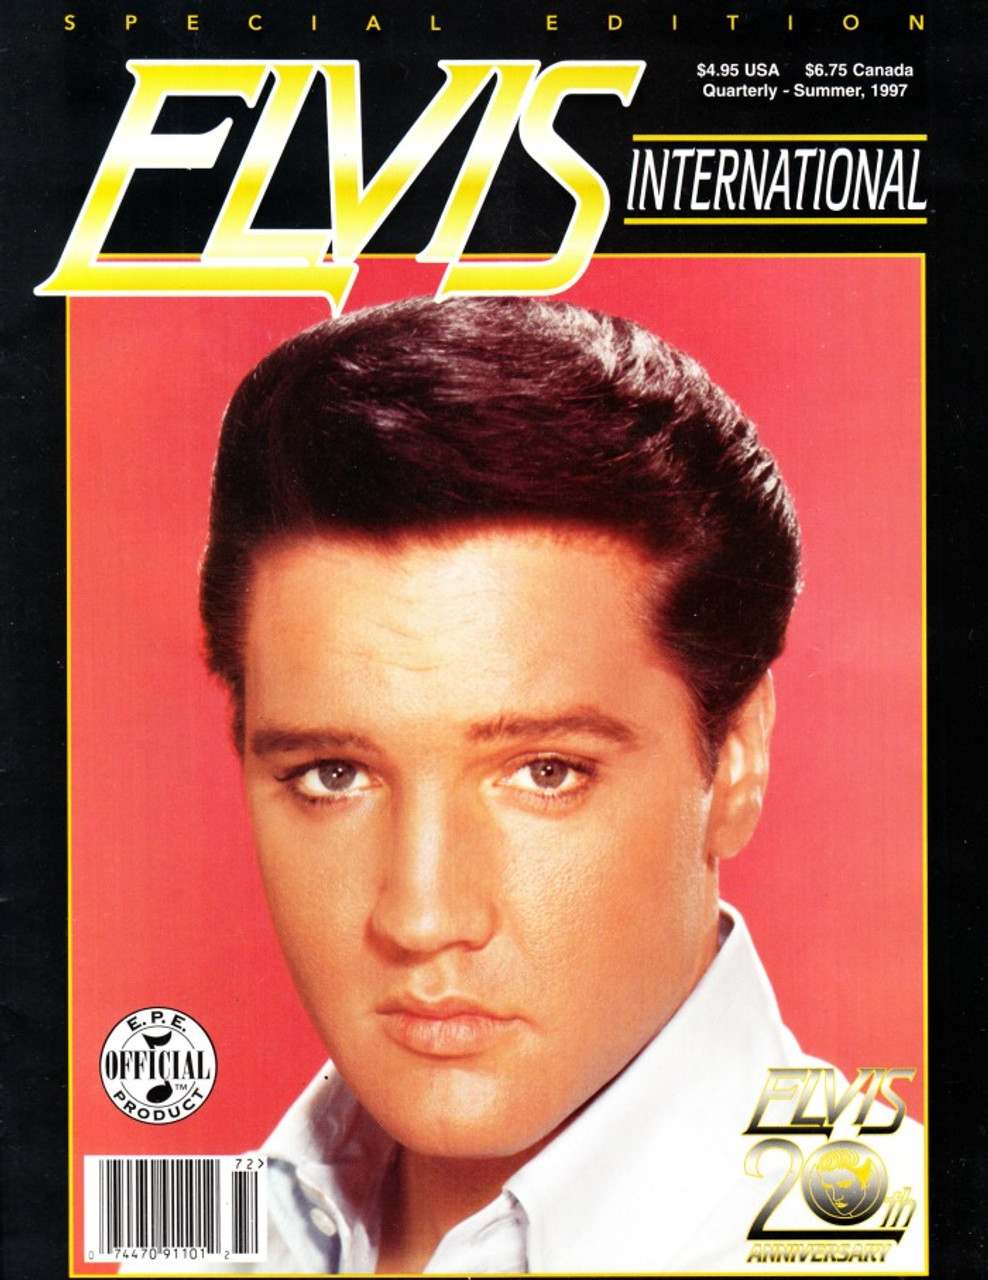 Elvis Presley International Forum Magazine Summer 1997 '72 Madison Square Garden
